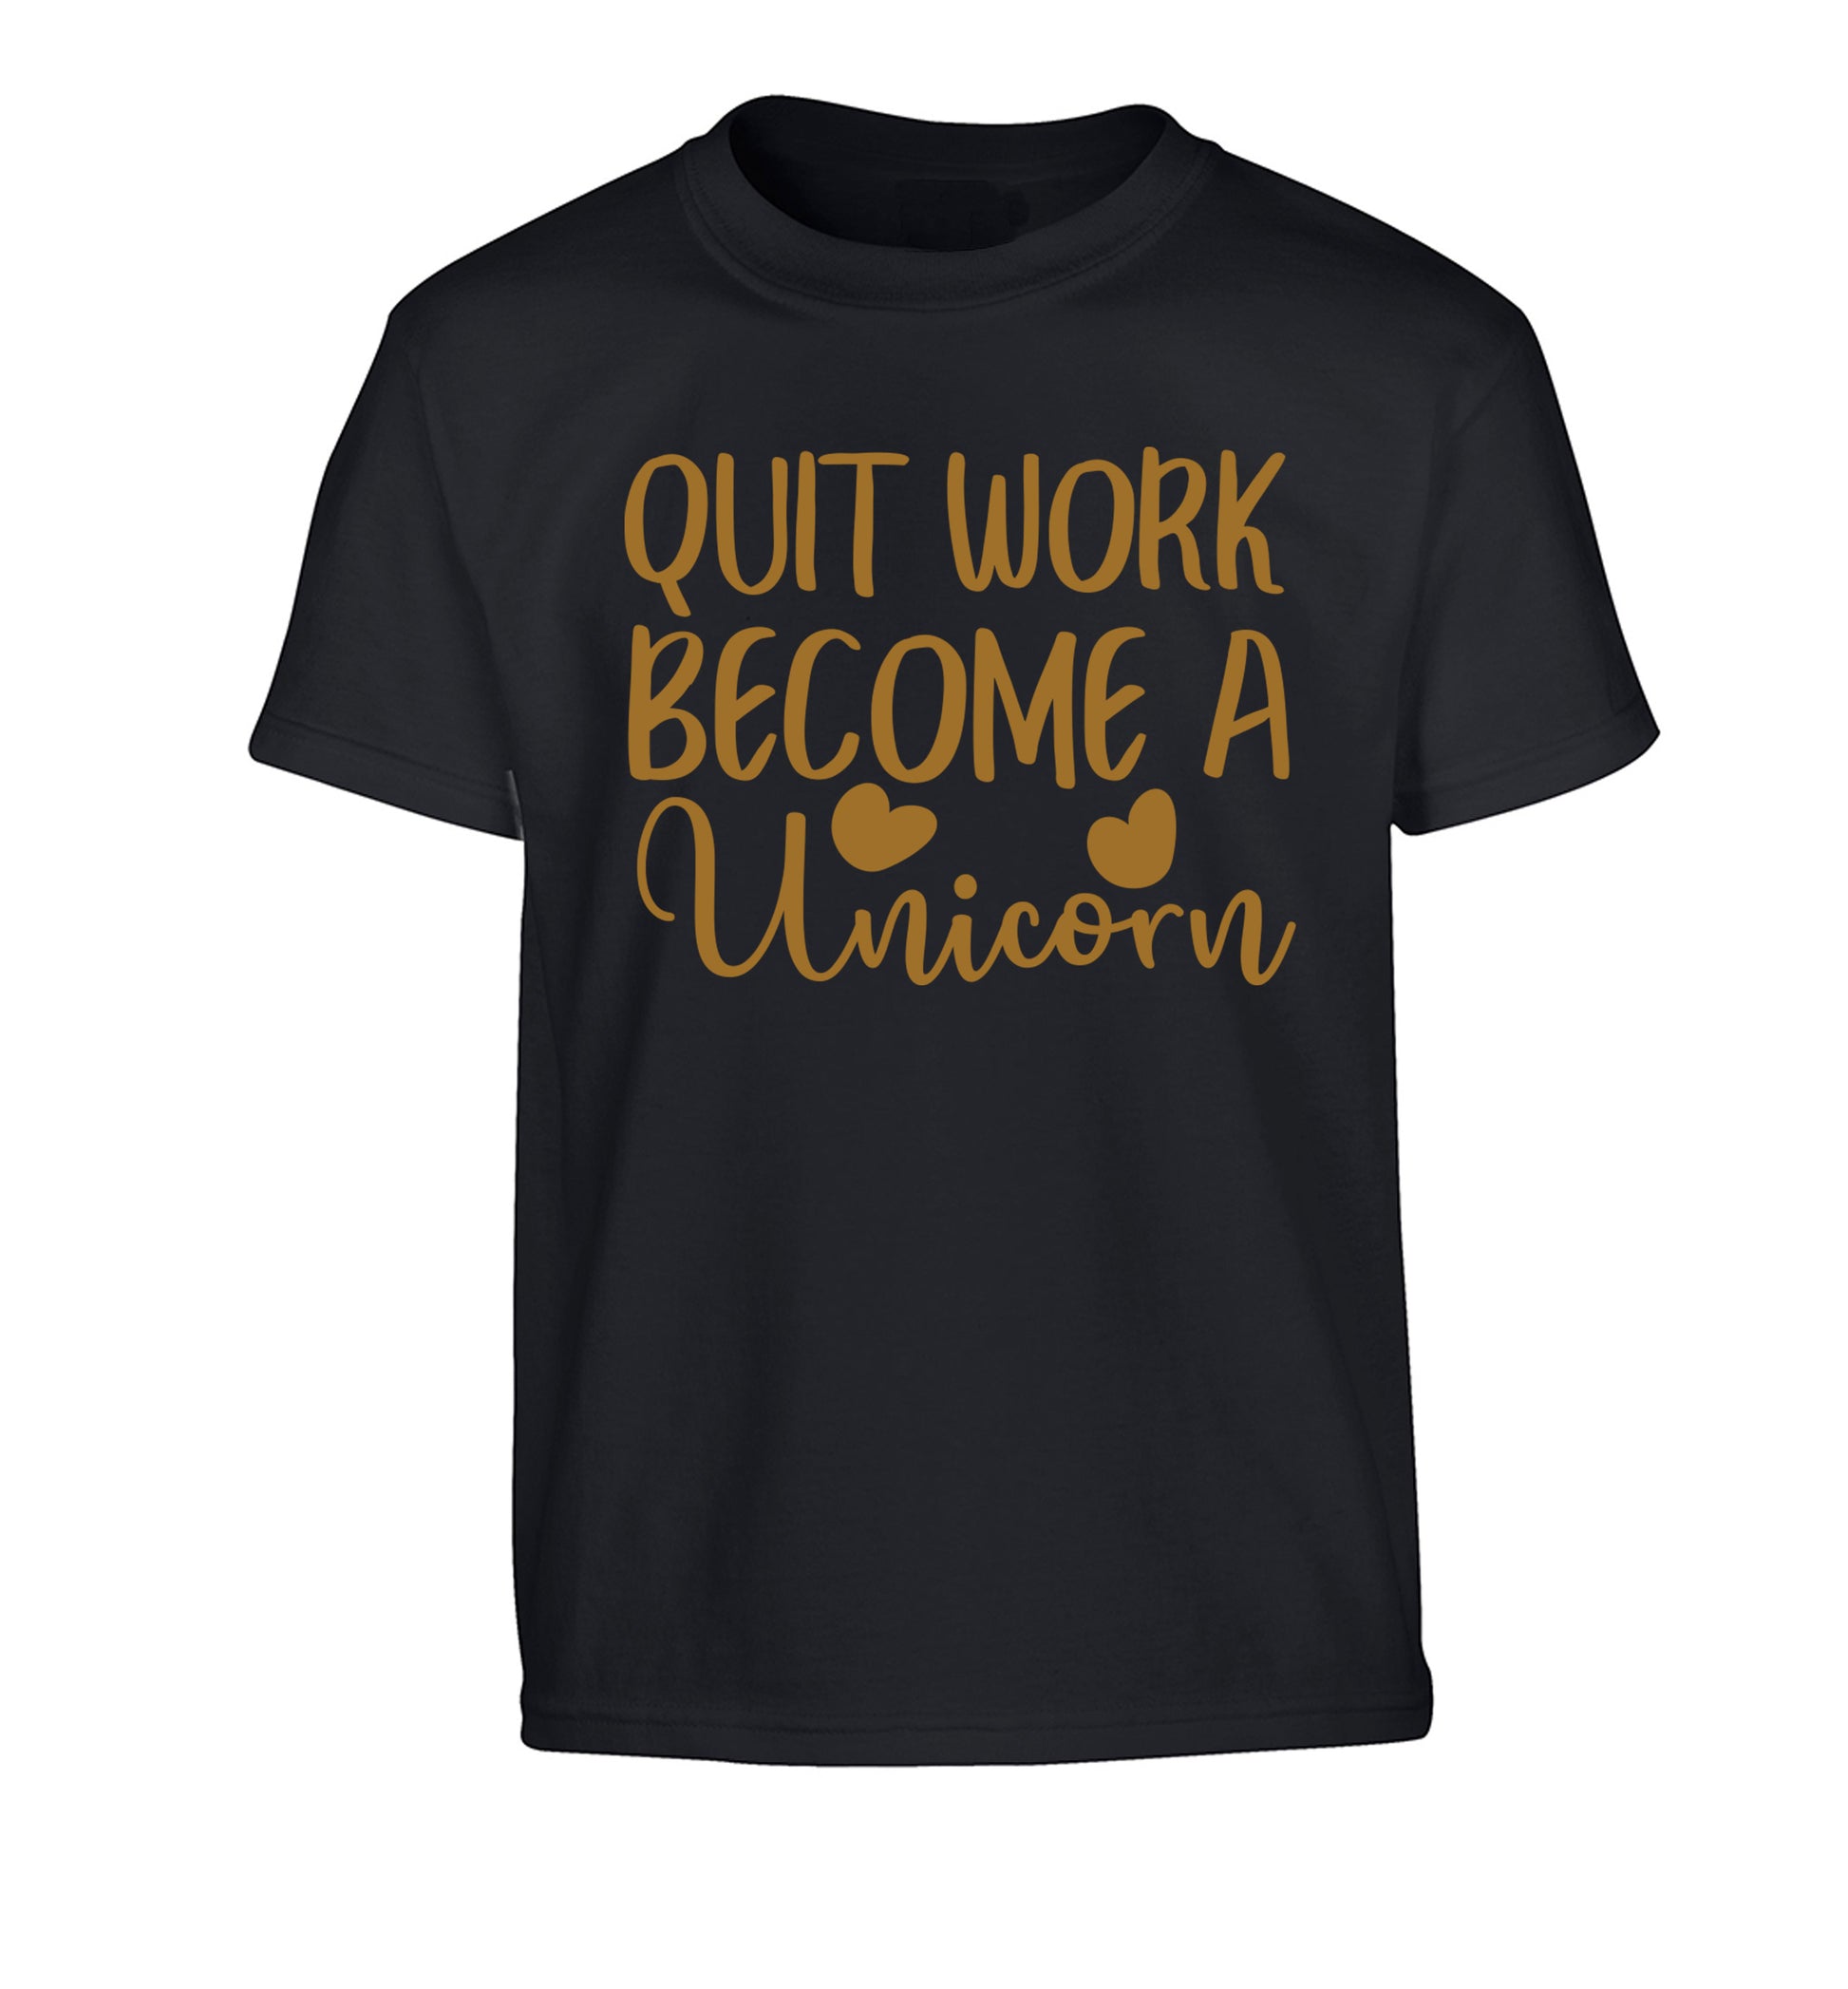 Quit work become a unicorn Children's black Tshirt 12-13 Years